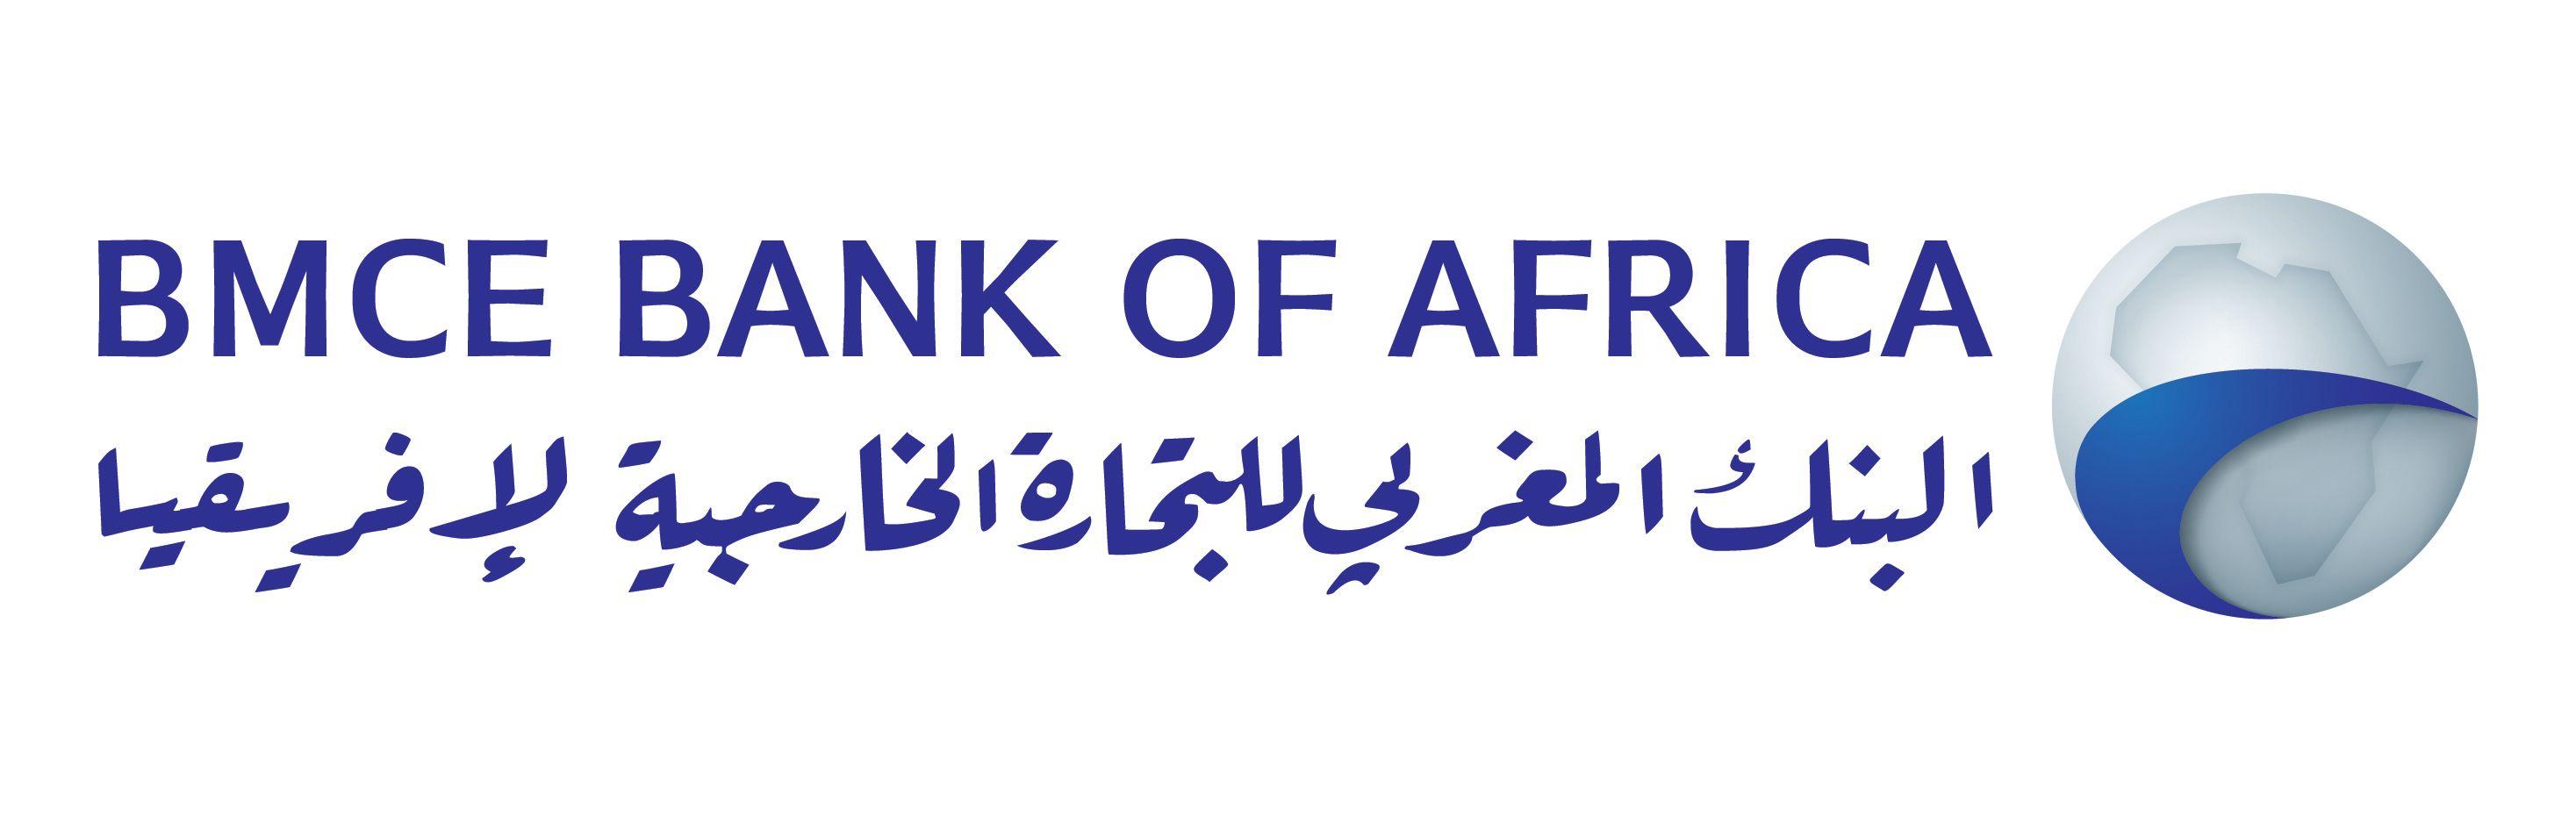 Bank of Africa Logo - BMCE Bank Of Africa